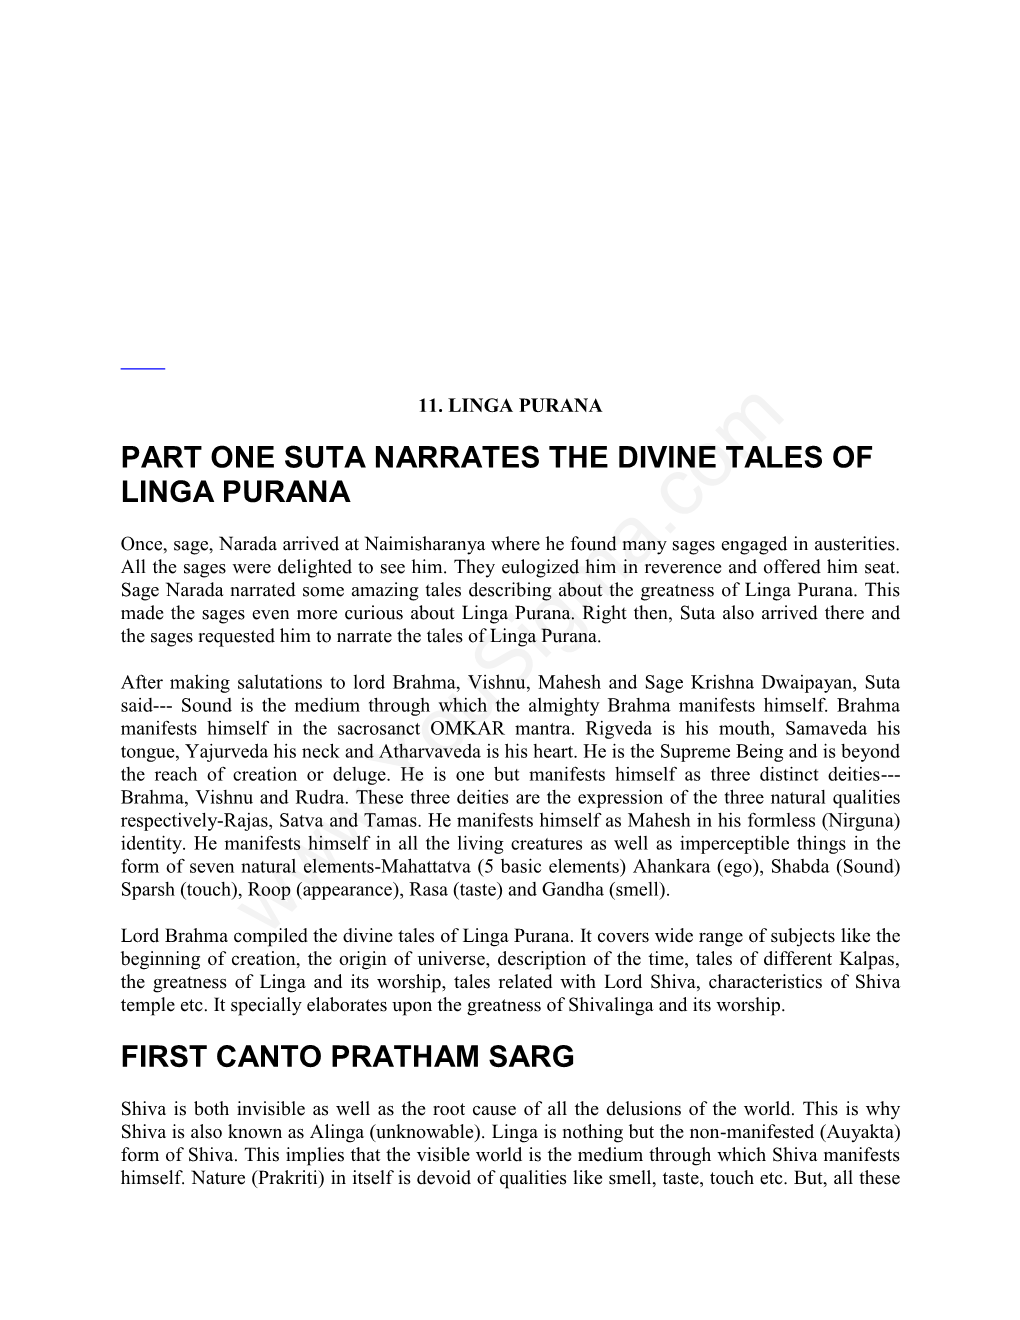 Part One Suta Narrates the Divine Tales of Linga Purana